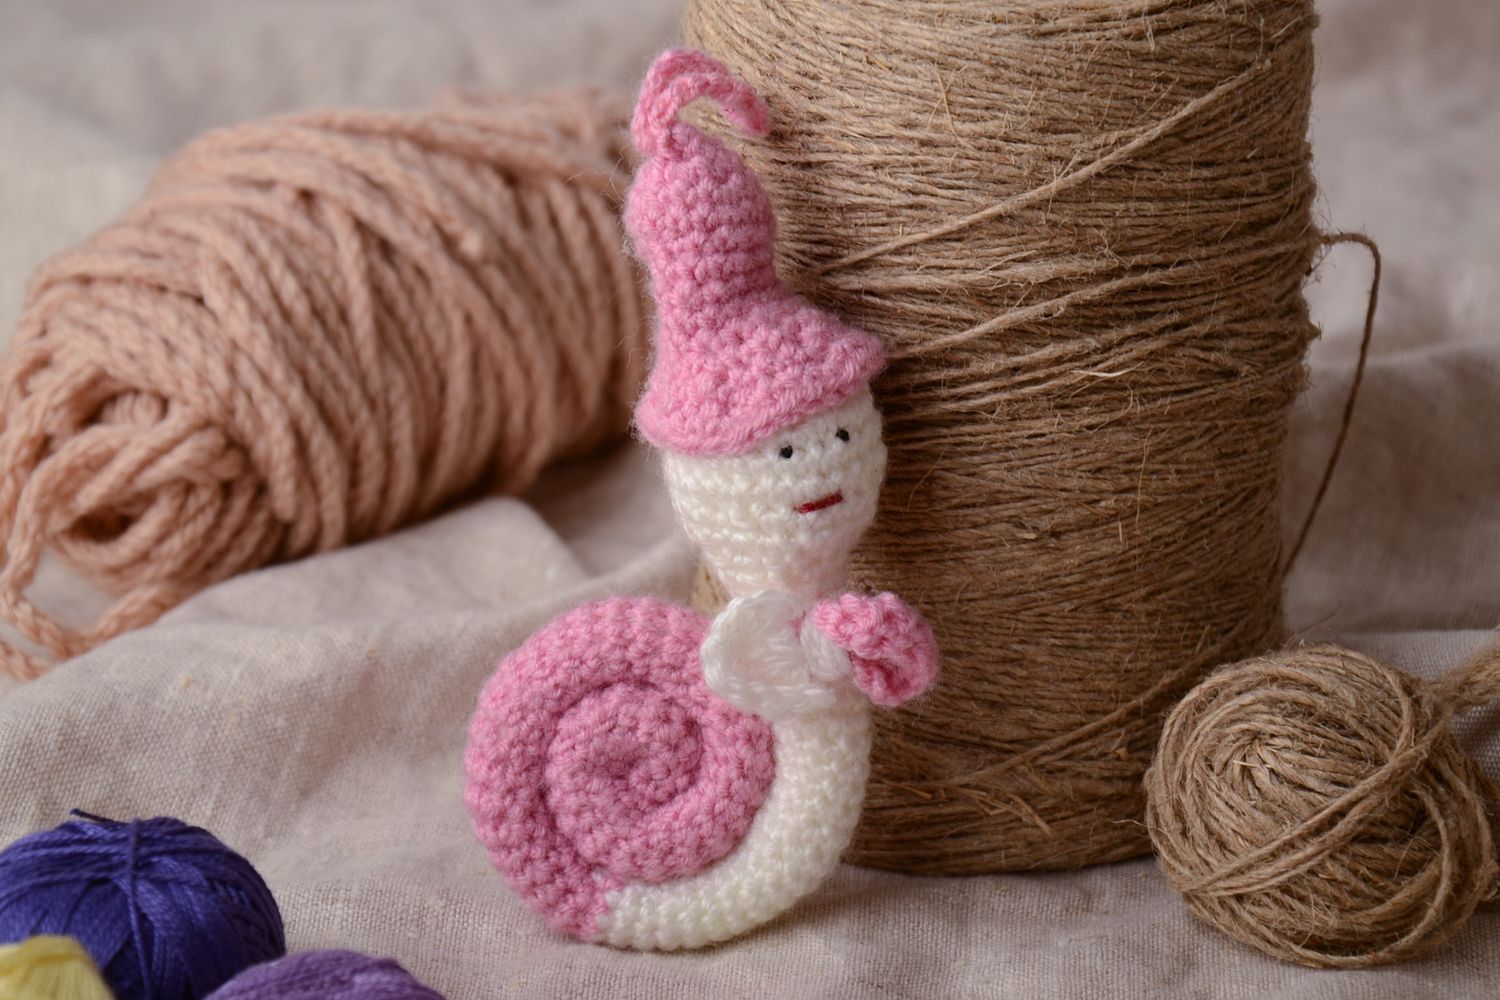 Crochet interior pendant in the shape of snail photo 1